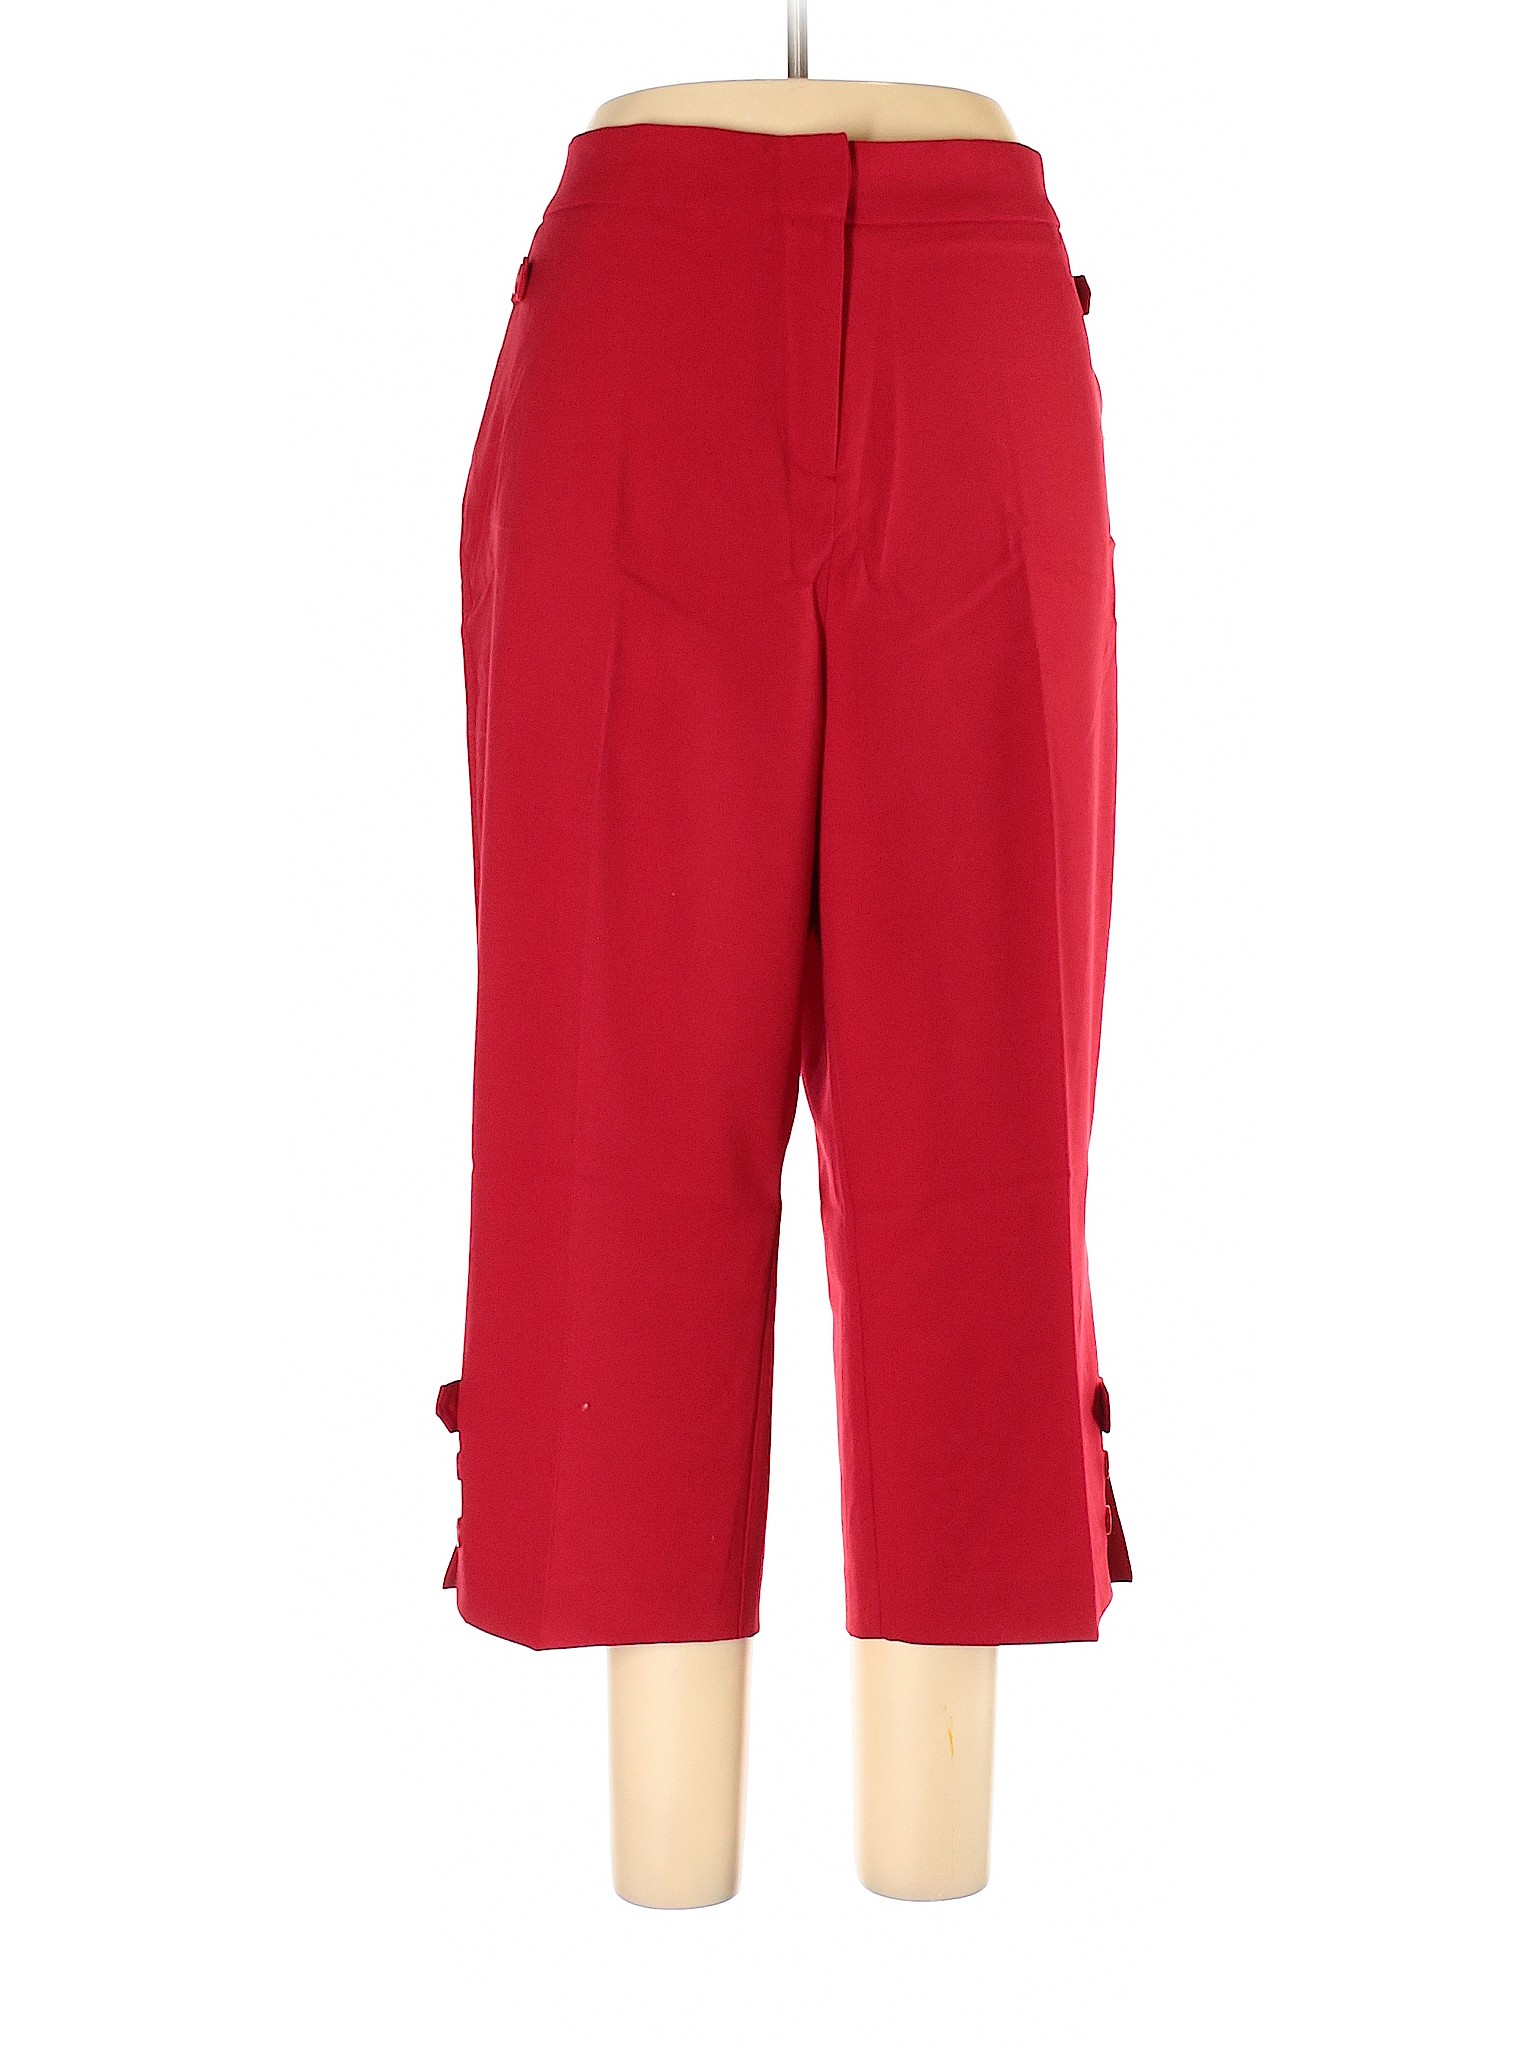 Susan Graver Solid Red Dress Pants Size XL - 85% off | thredUP